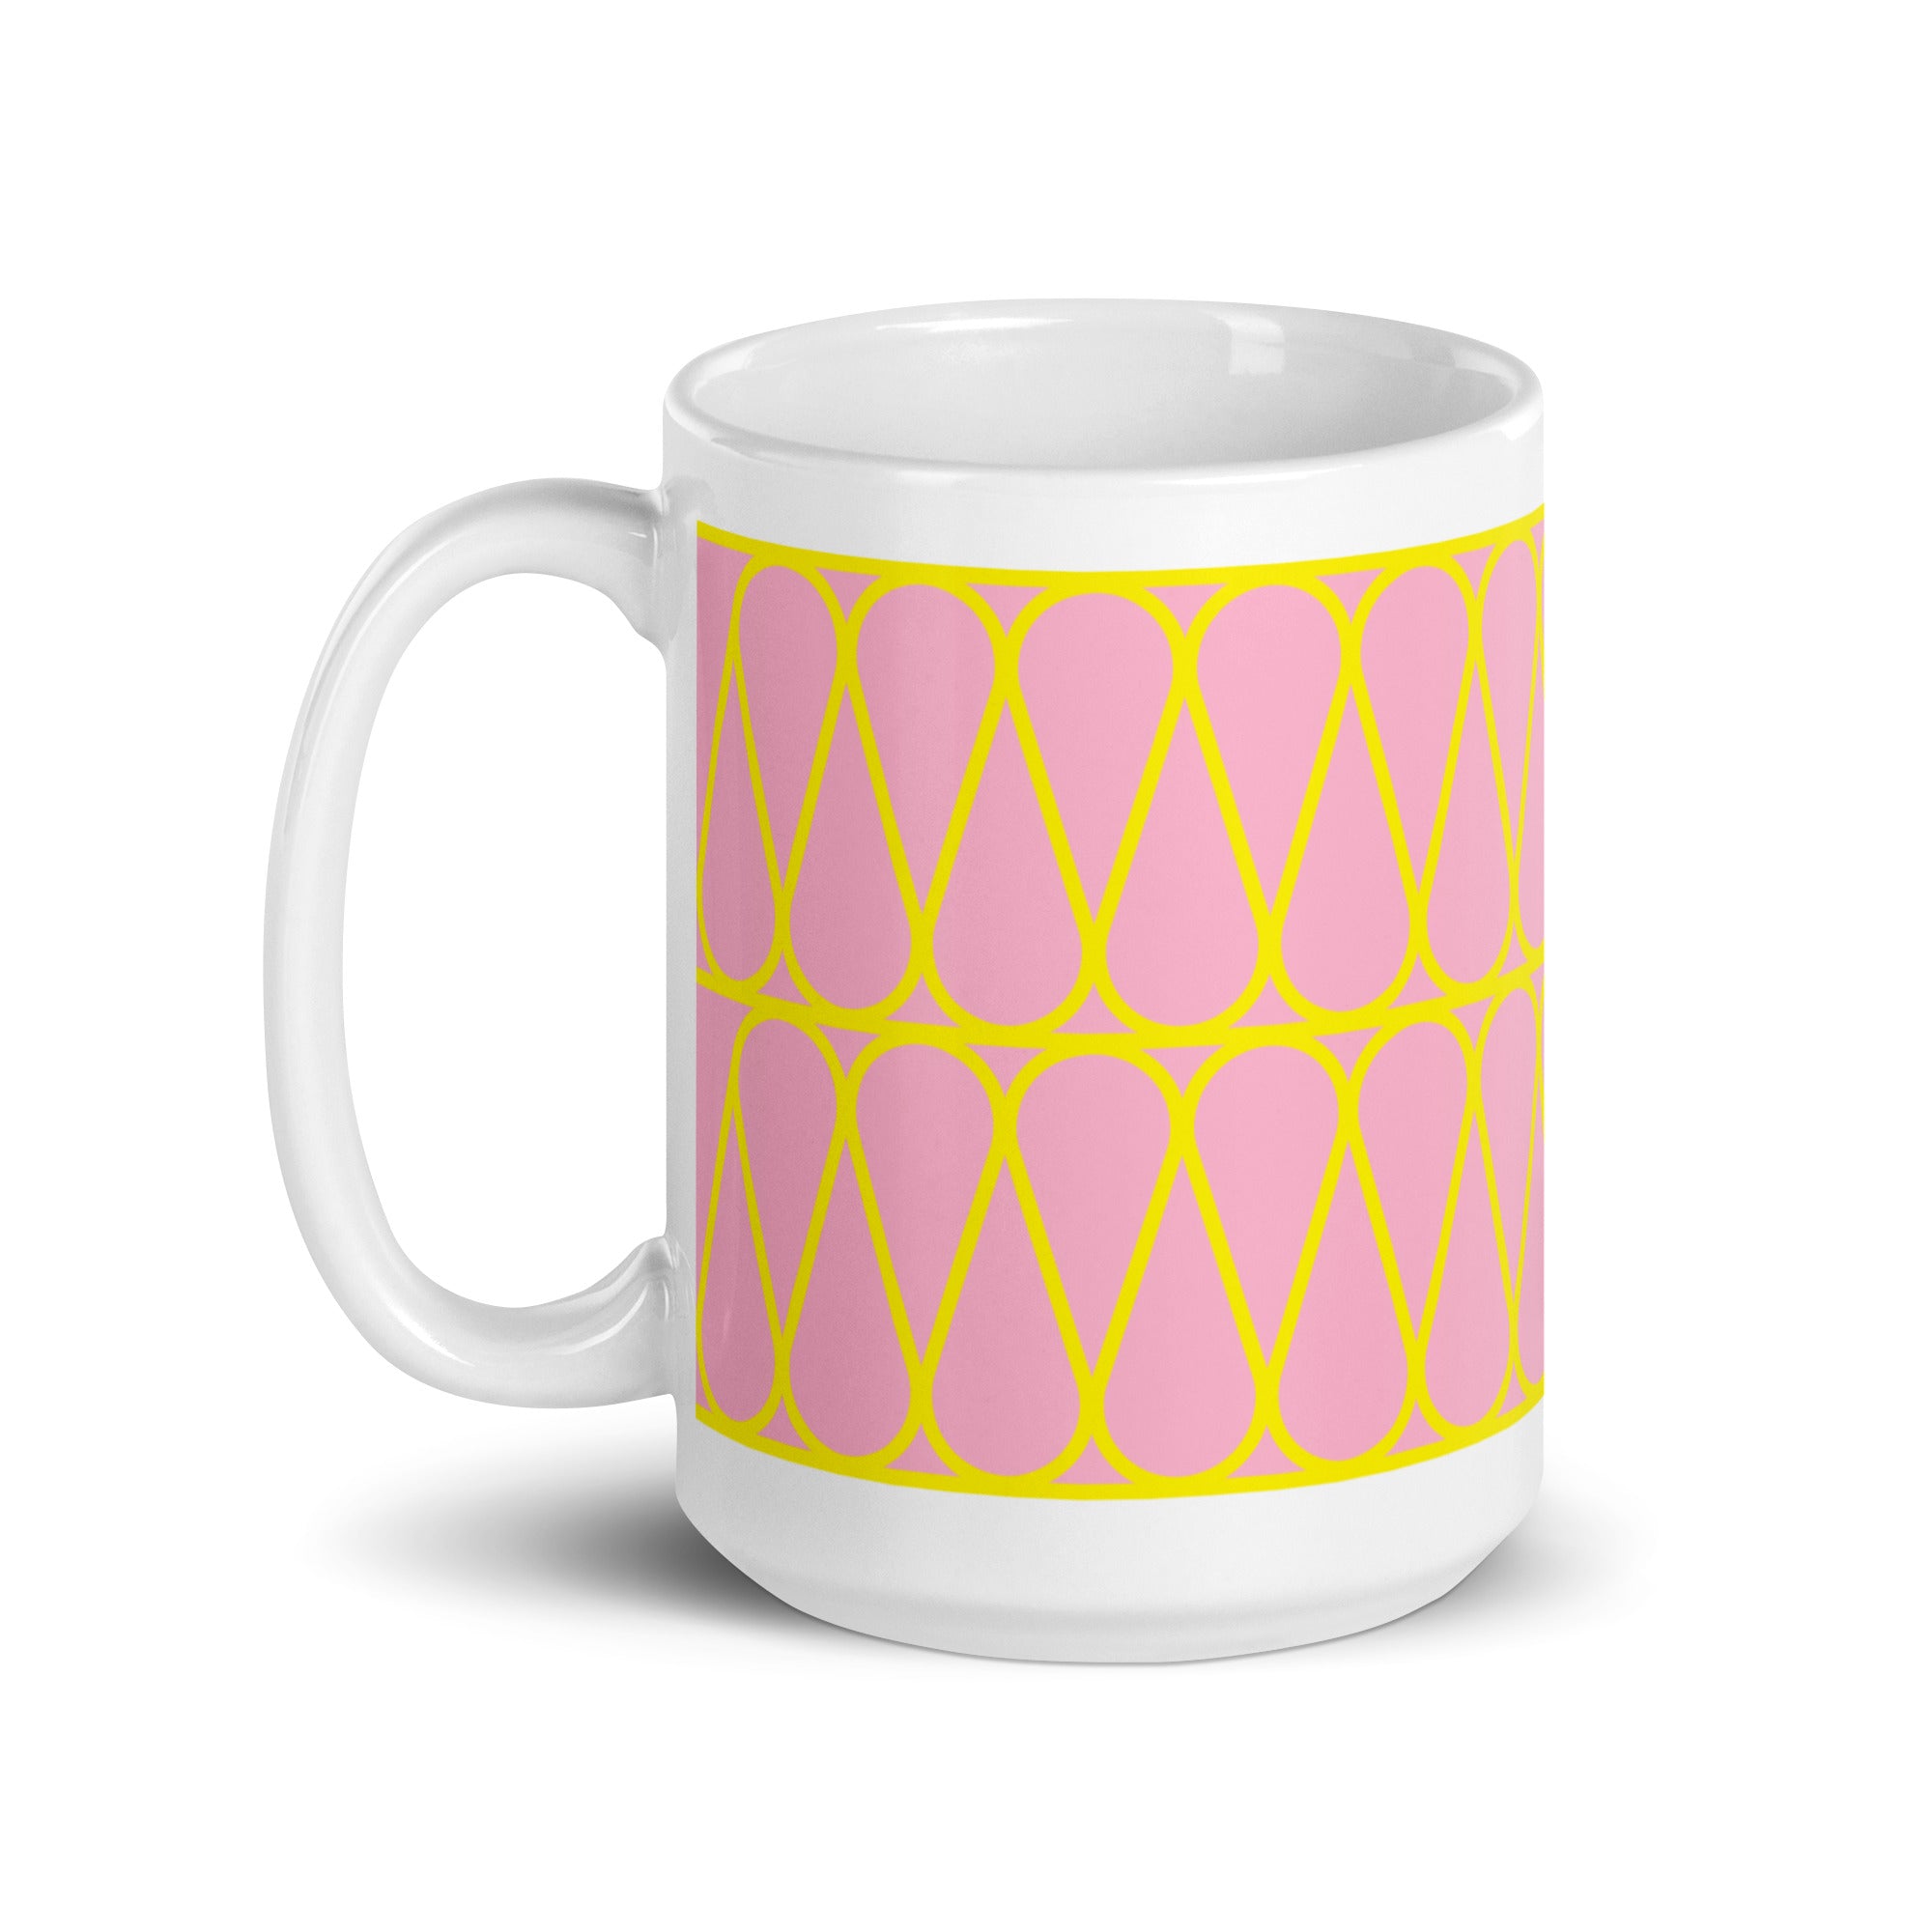 Insulation Pink & Yellow Hatch Mugs